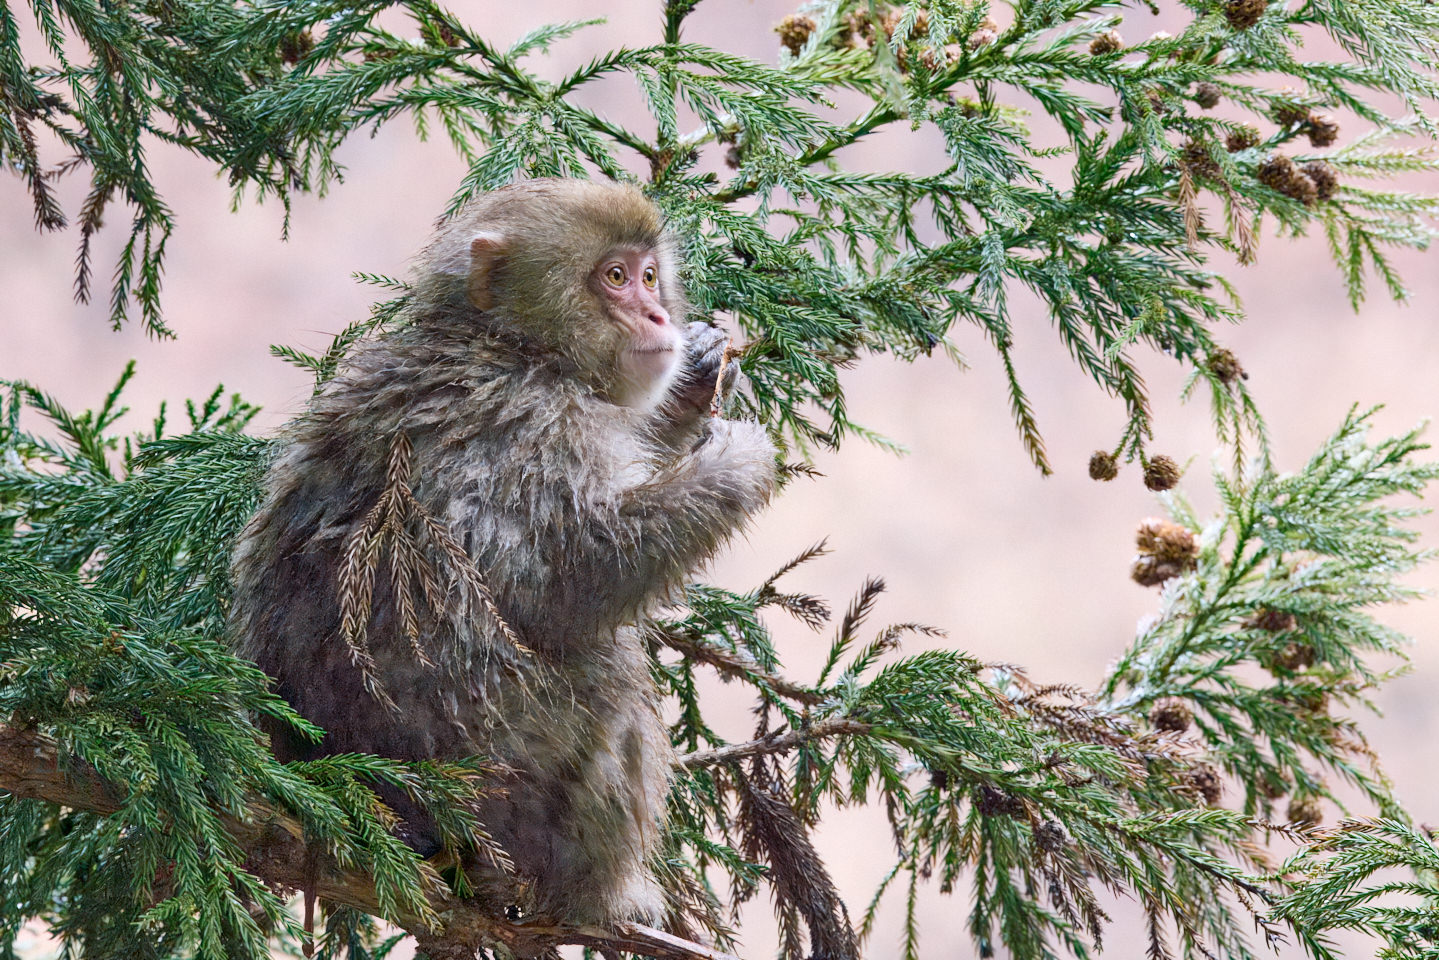 Baby Monkey in Evergreen Needles